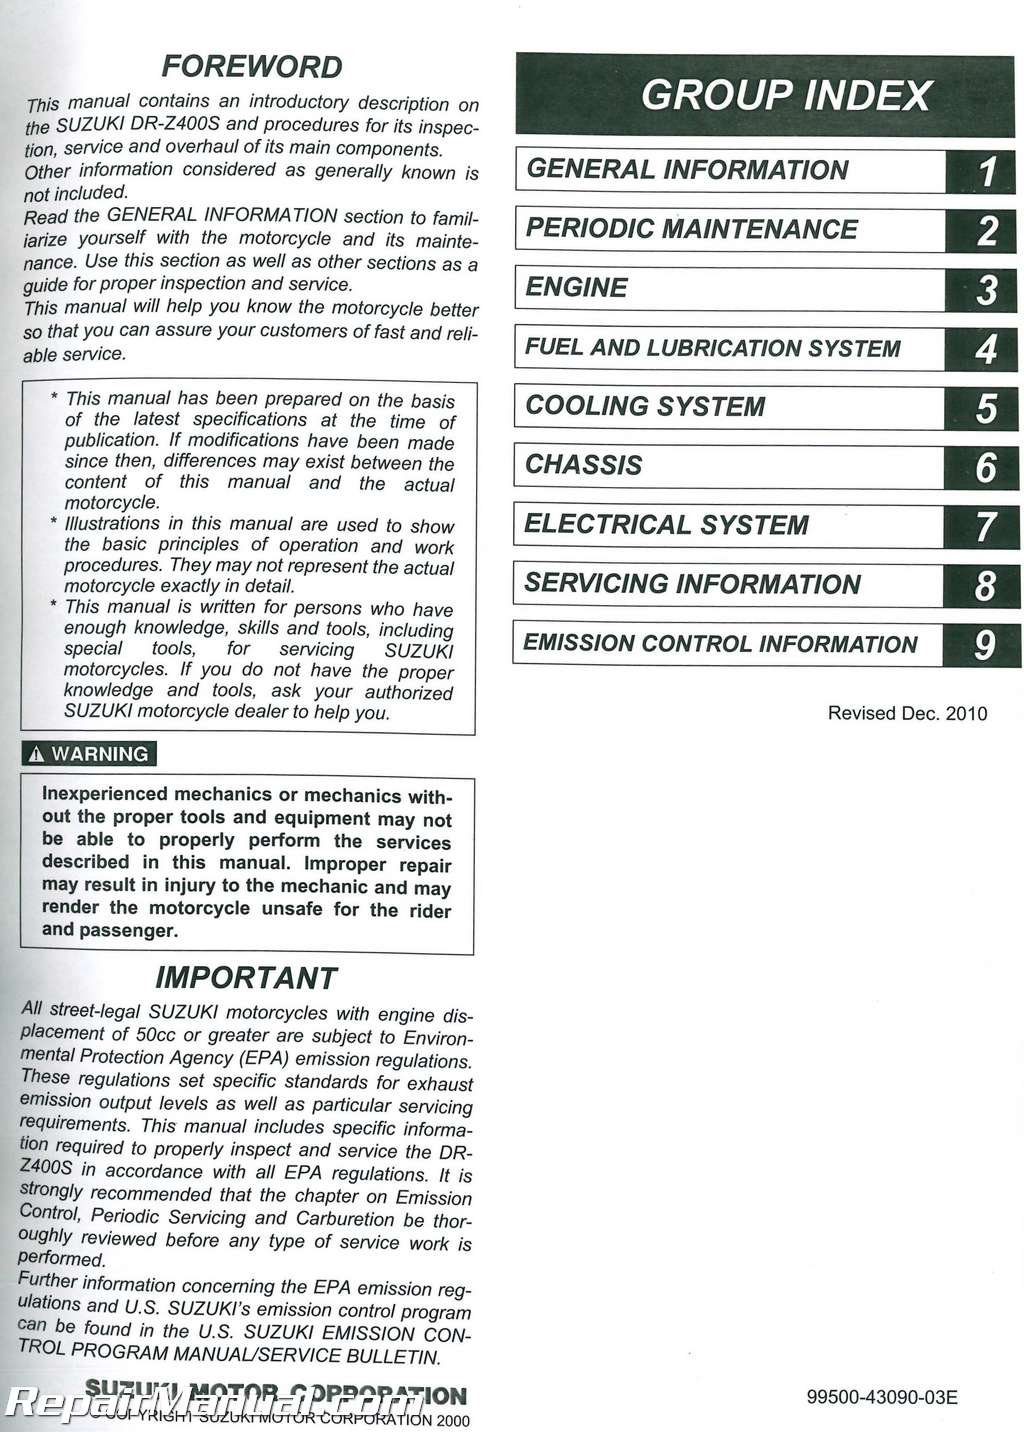 Suzuki Motorcycle Service Manual Download